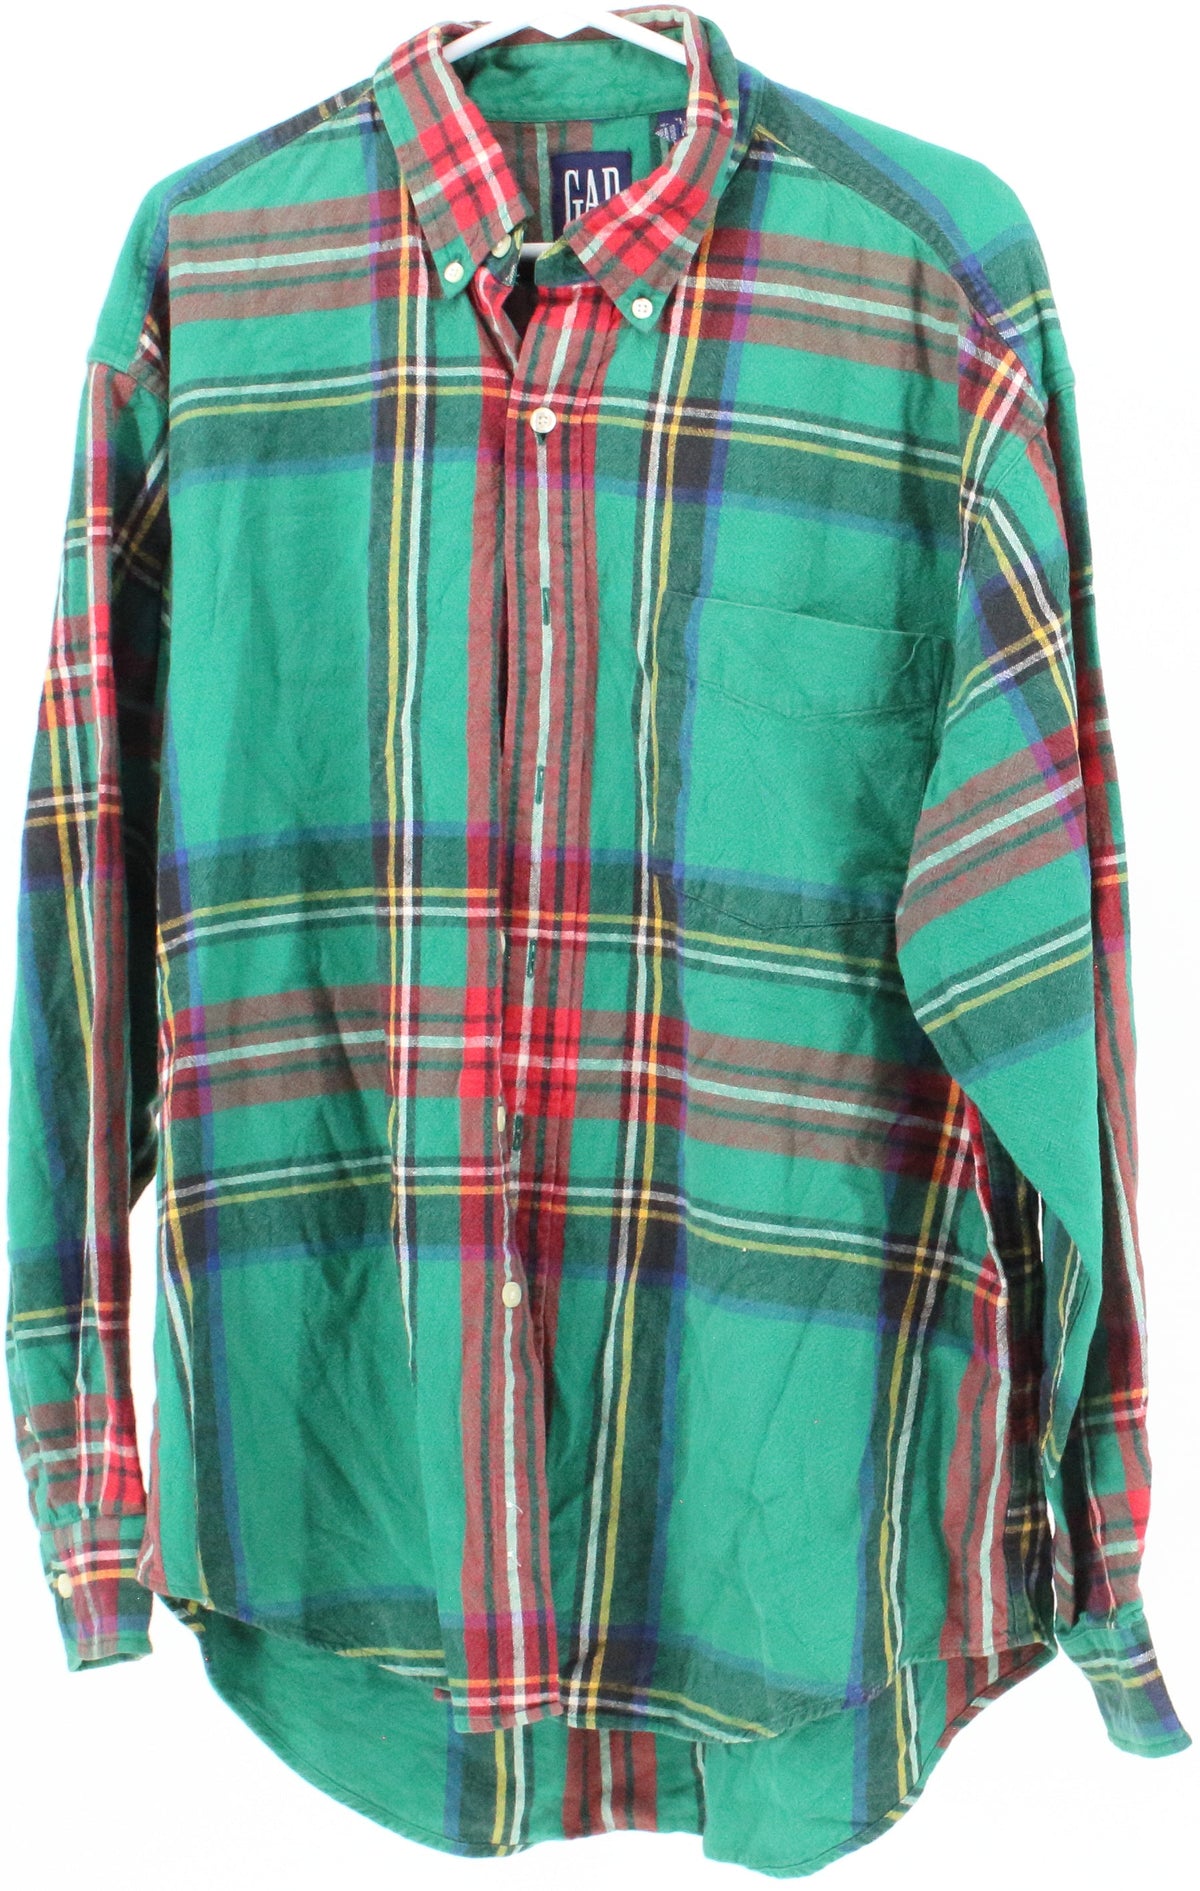 Gap Green Plaid Cotton Shirt